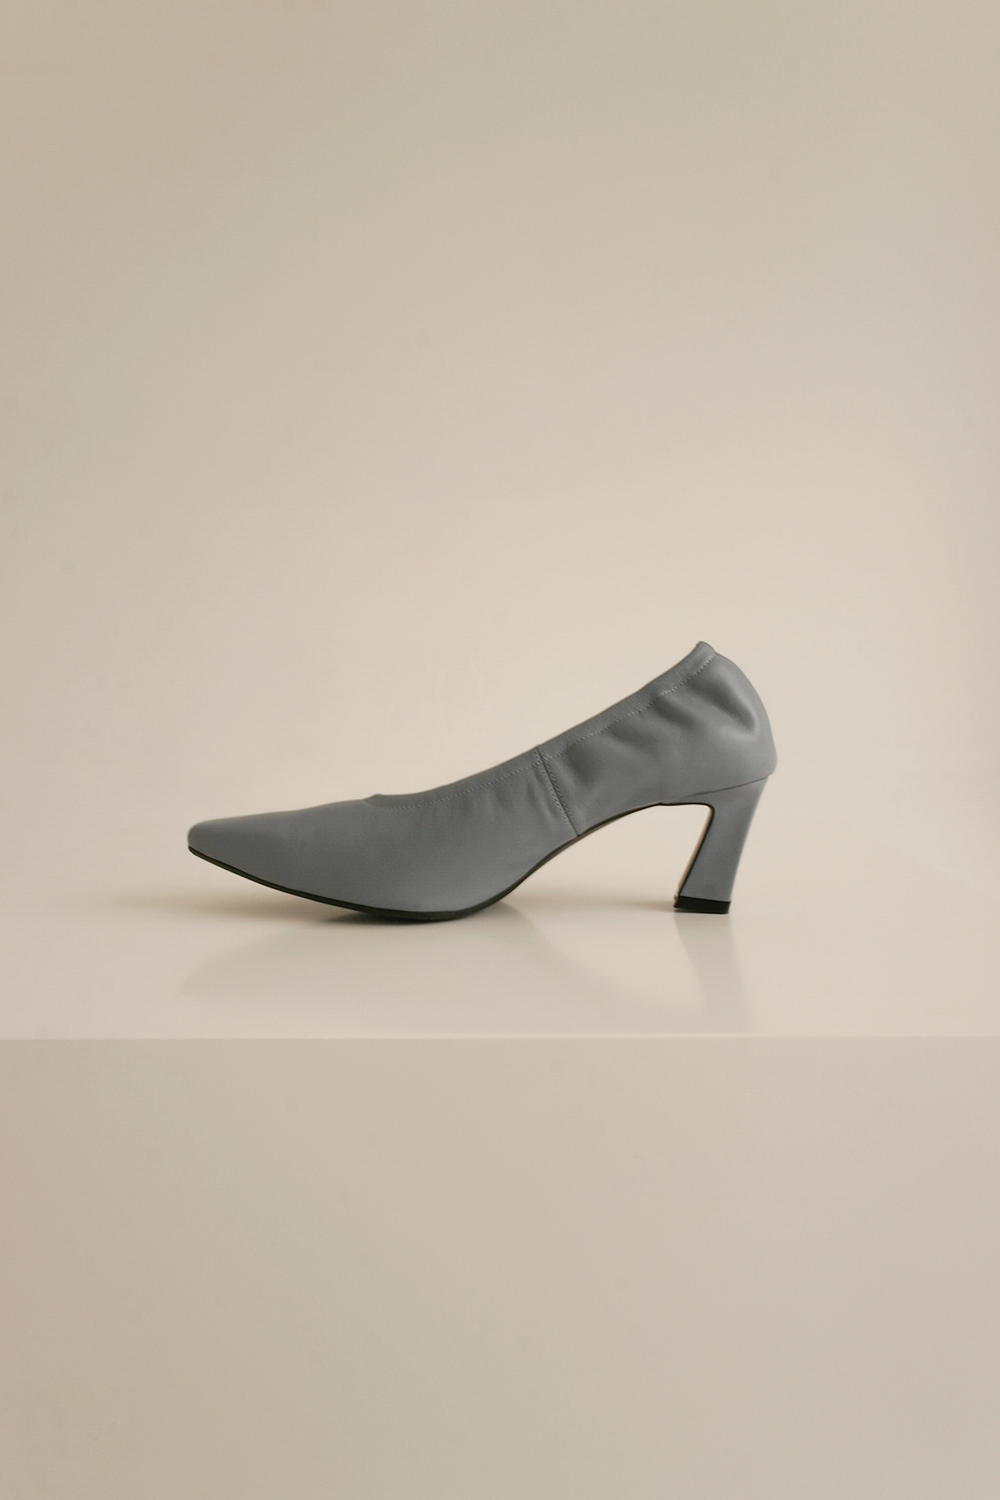 ANTHÈSE Bonheur pumps heel, sky blue (50%) 당일발송